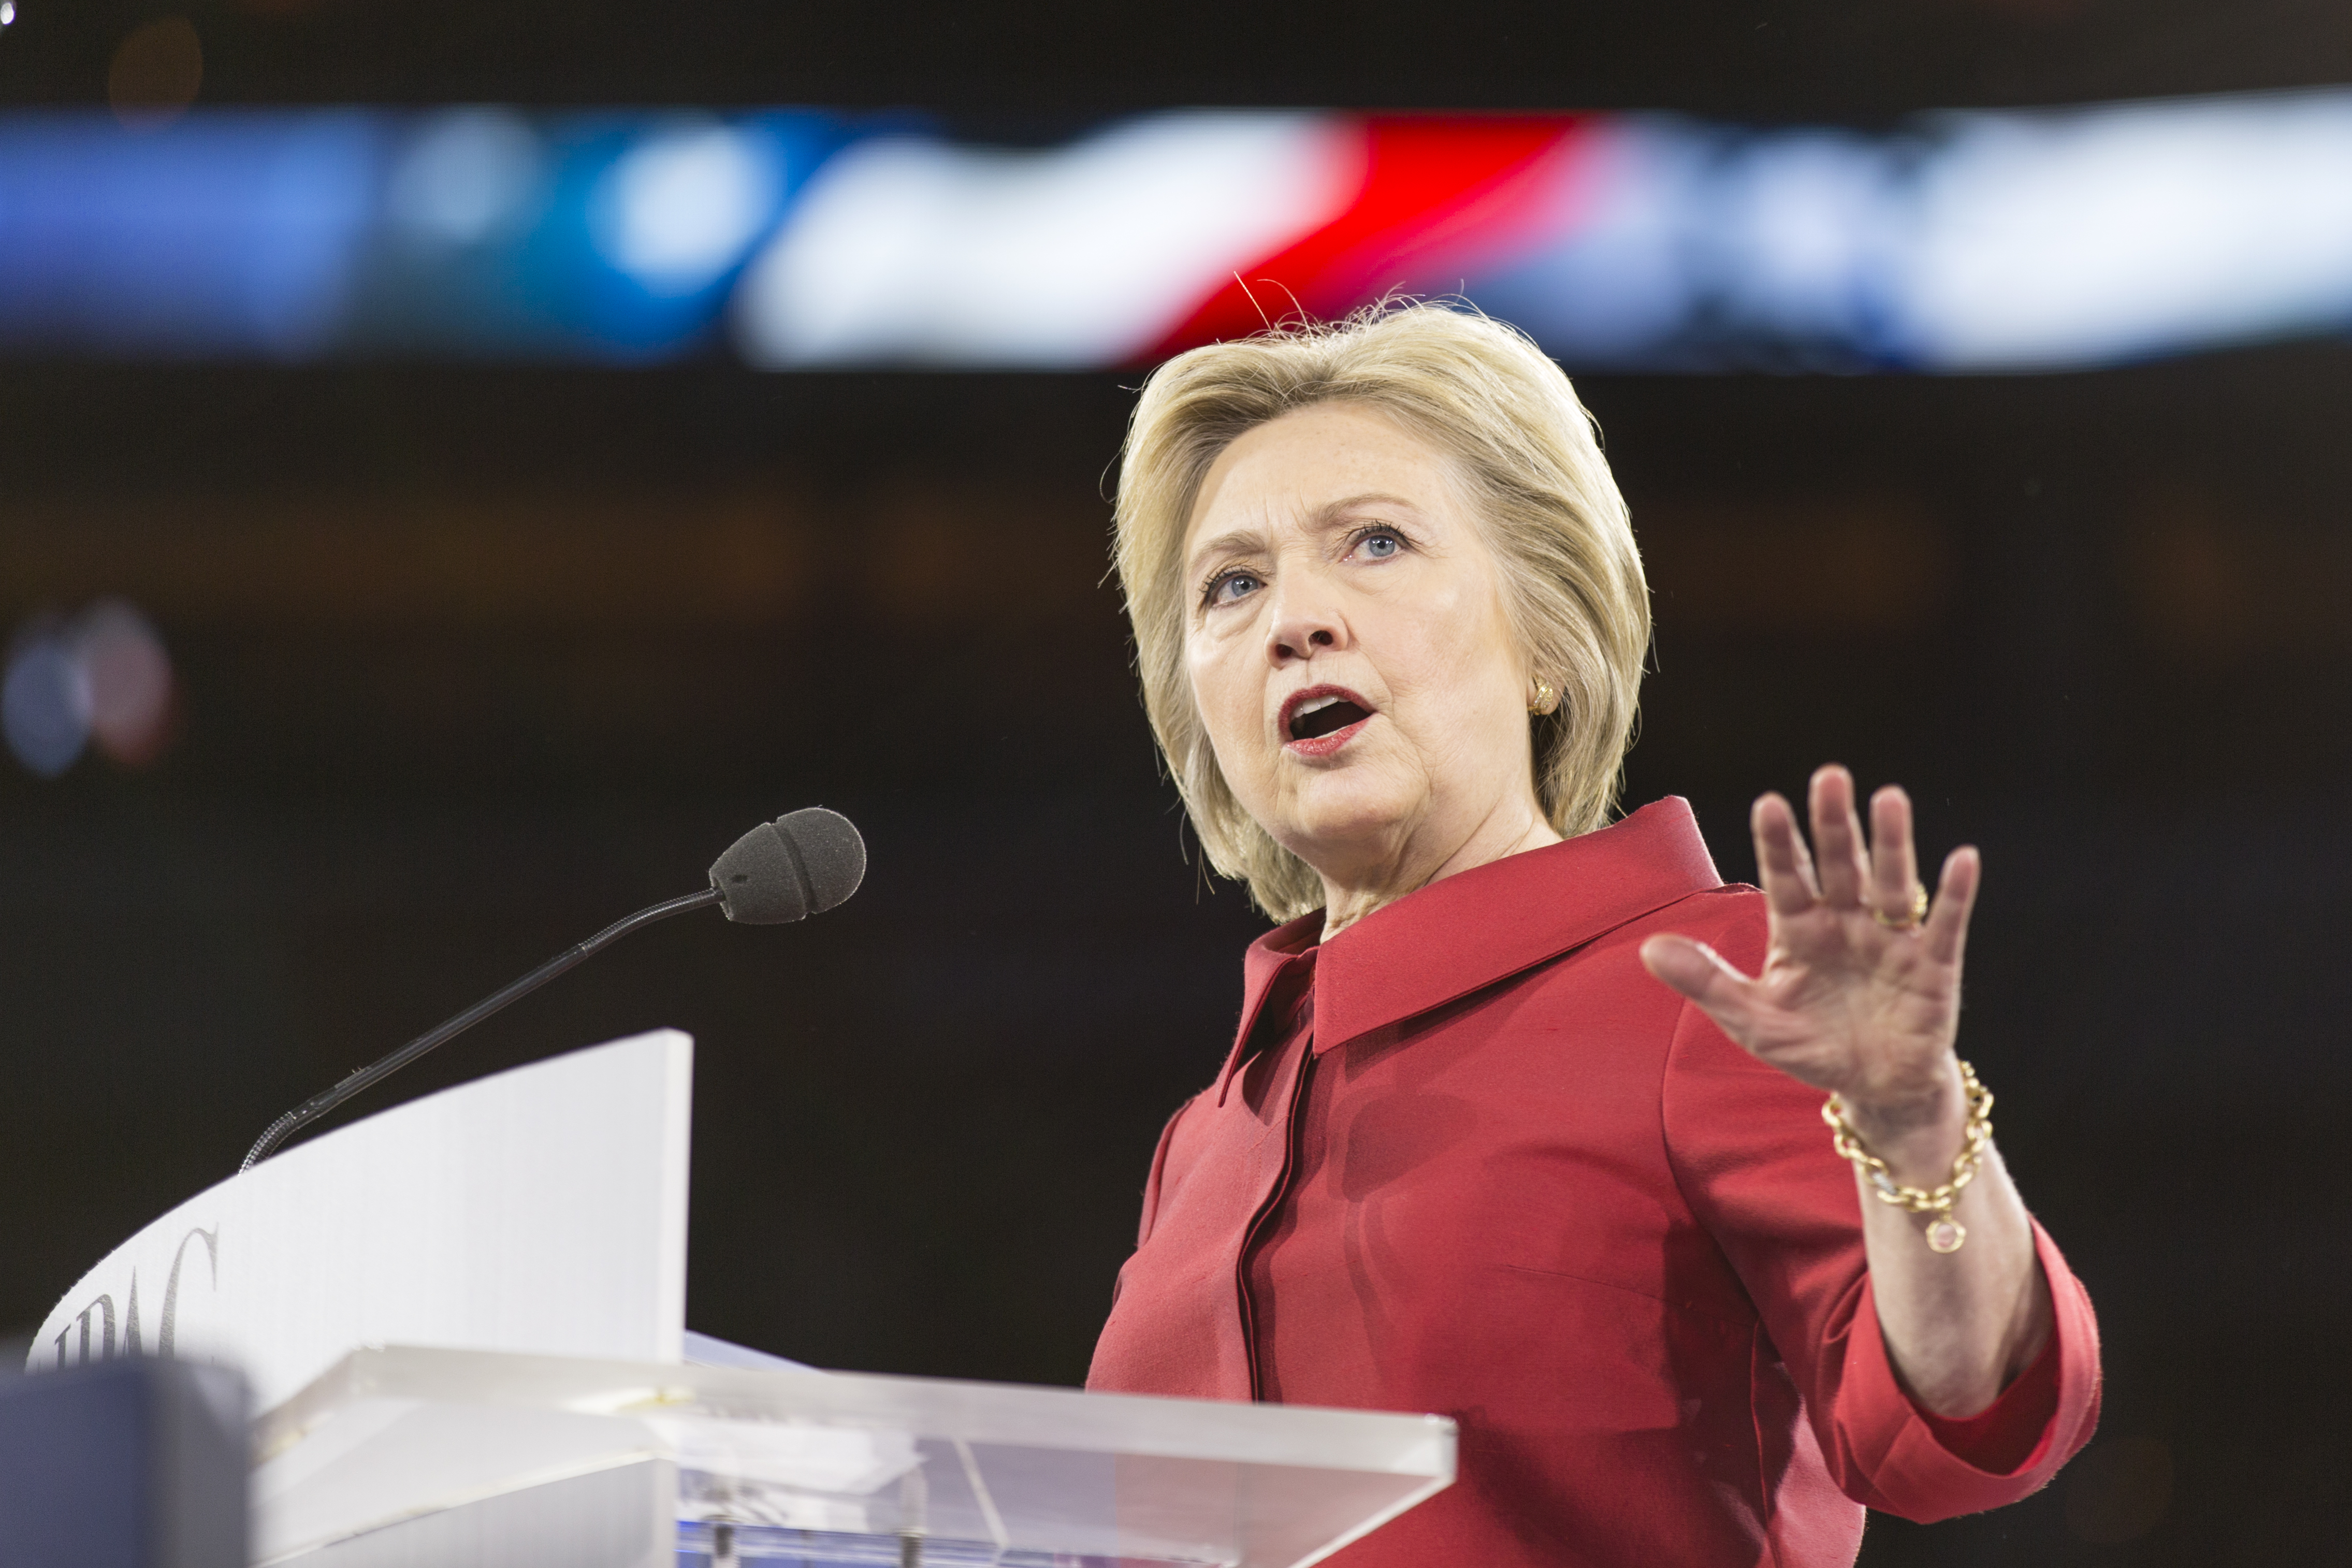 Clinton’s nomination sets precedent for women